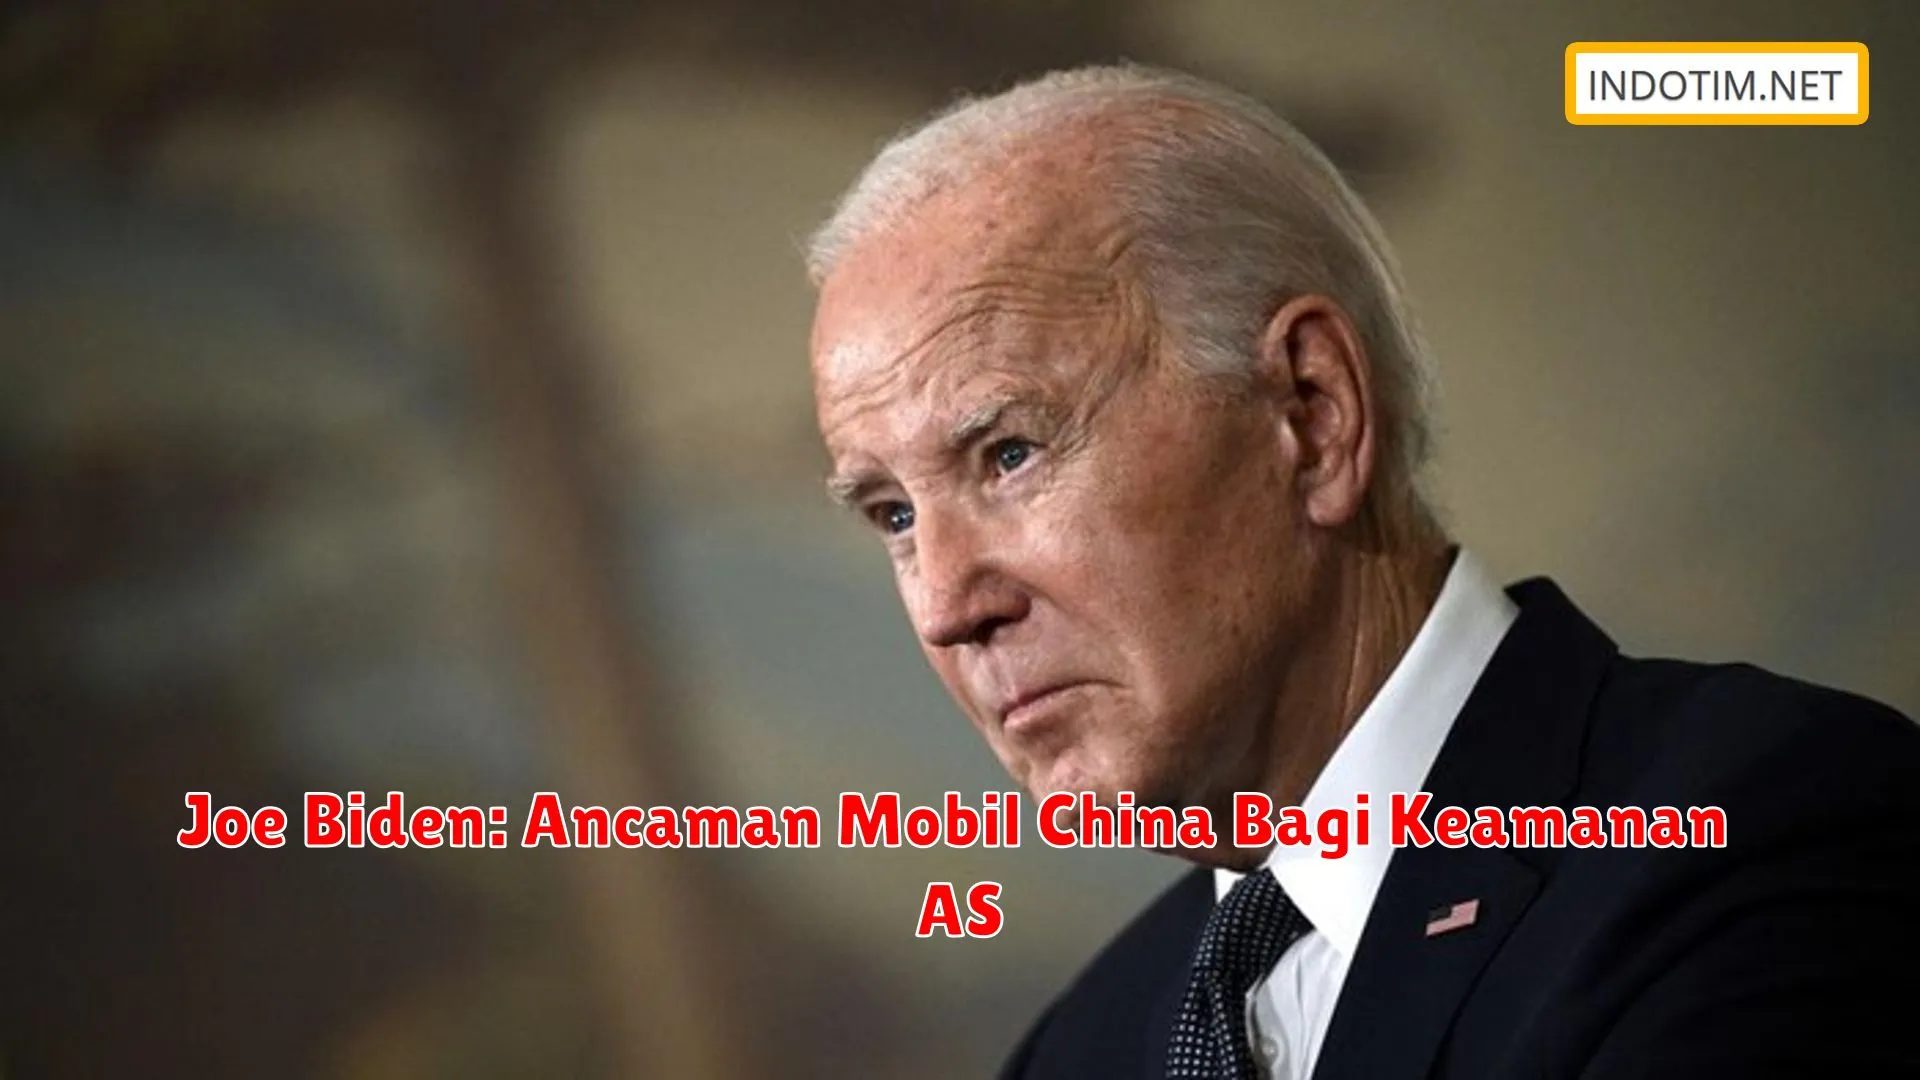 Joe Biden: Ancaman Mobil China Bagi Keamanan AS